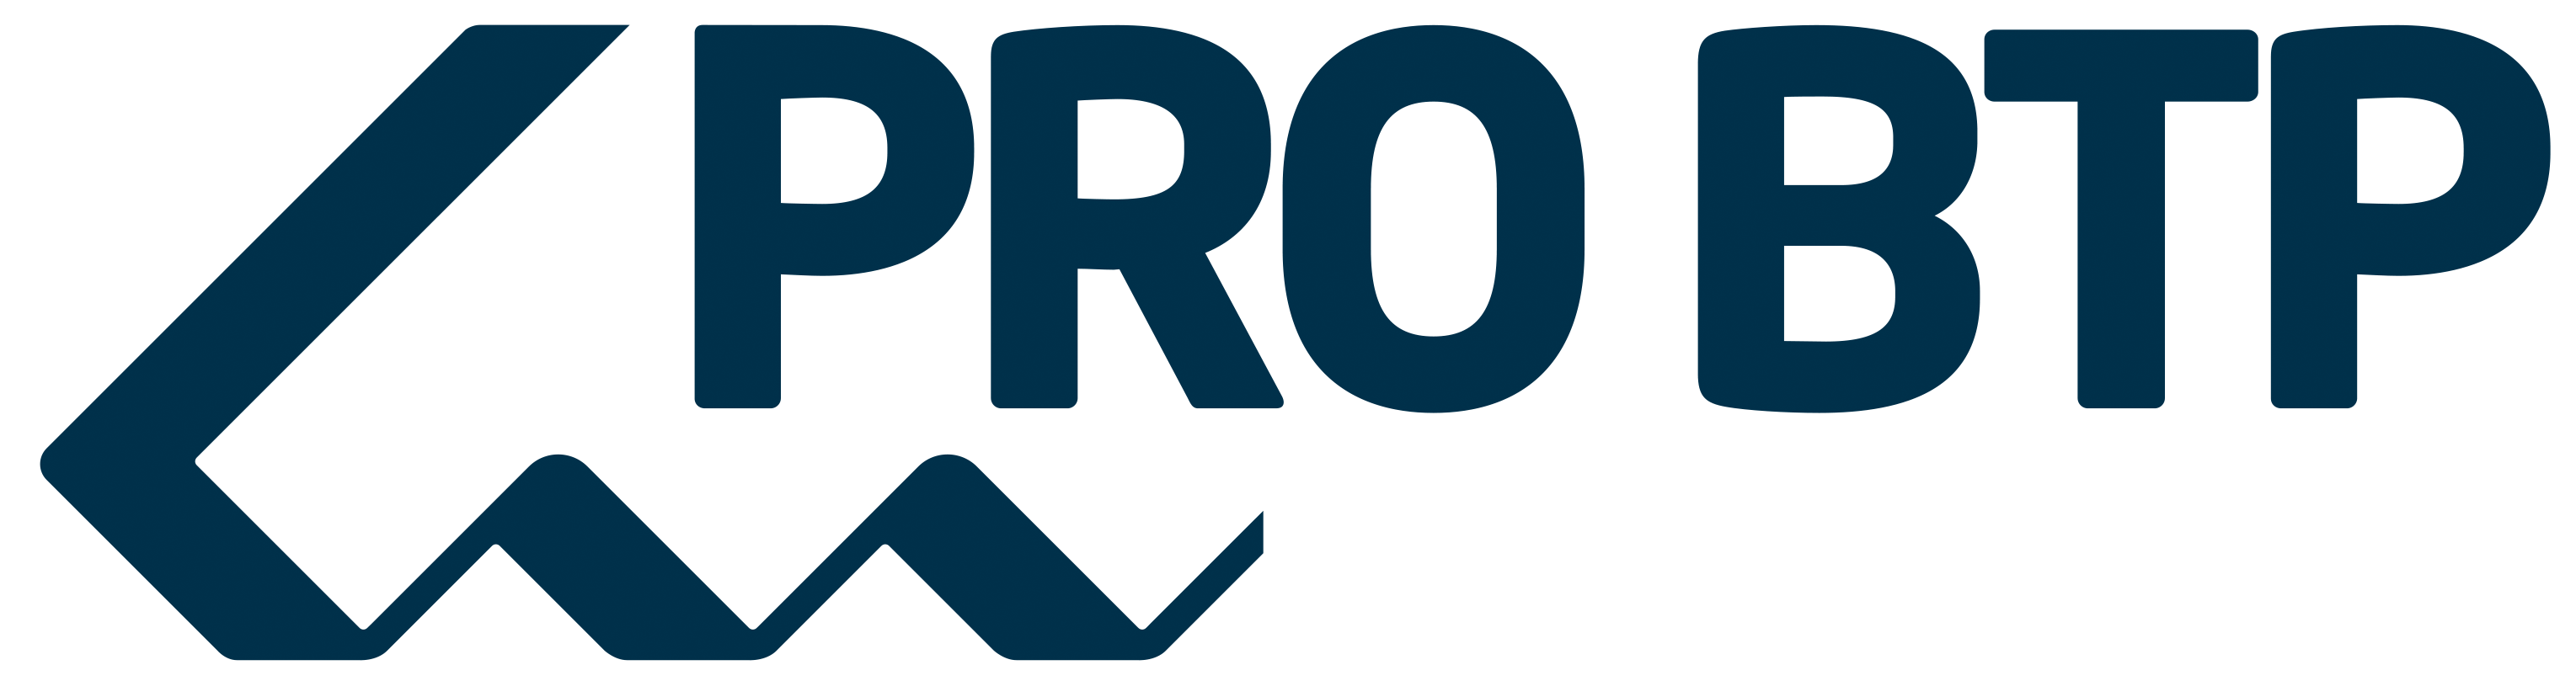 logo_pro_btp_rvb_300dpi_1.png